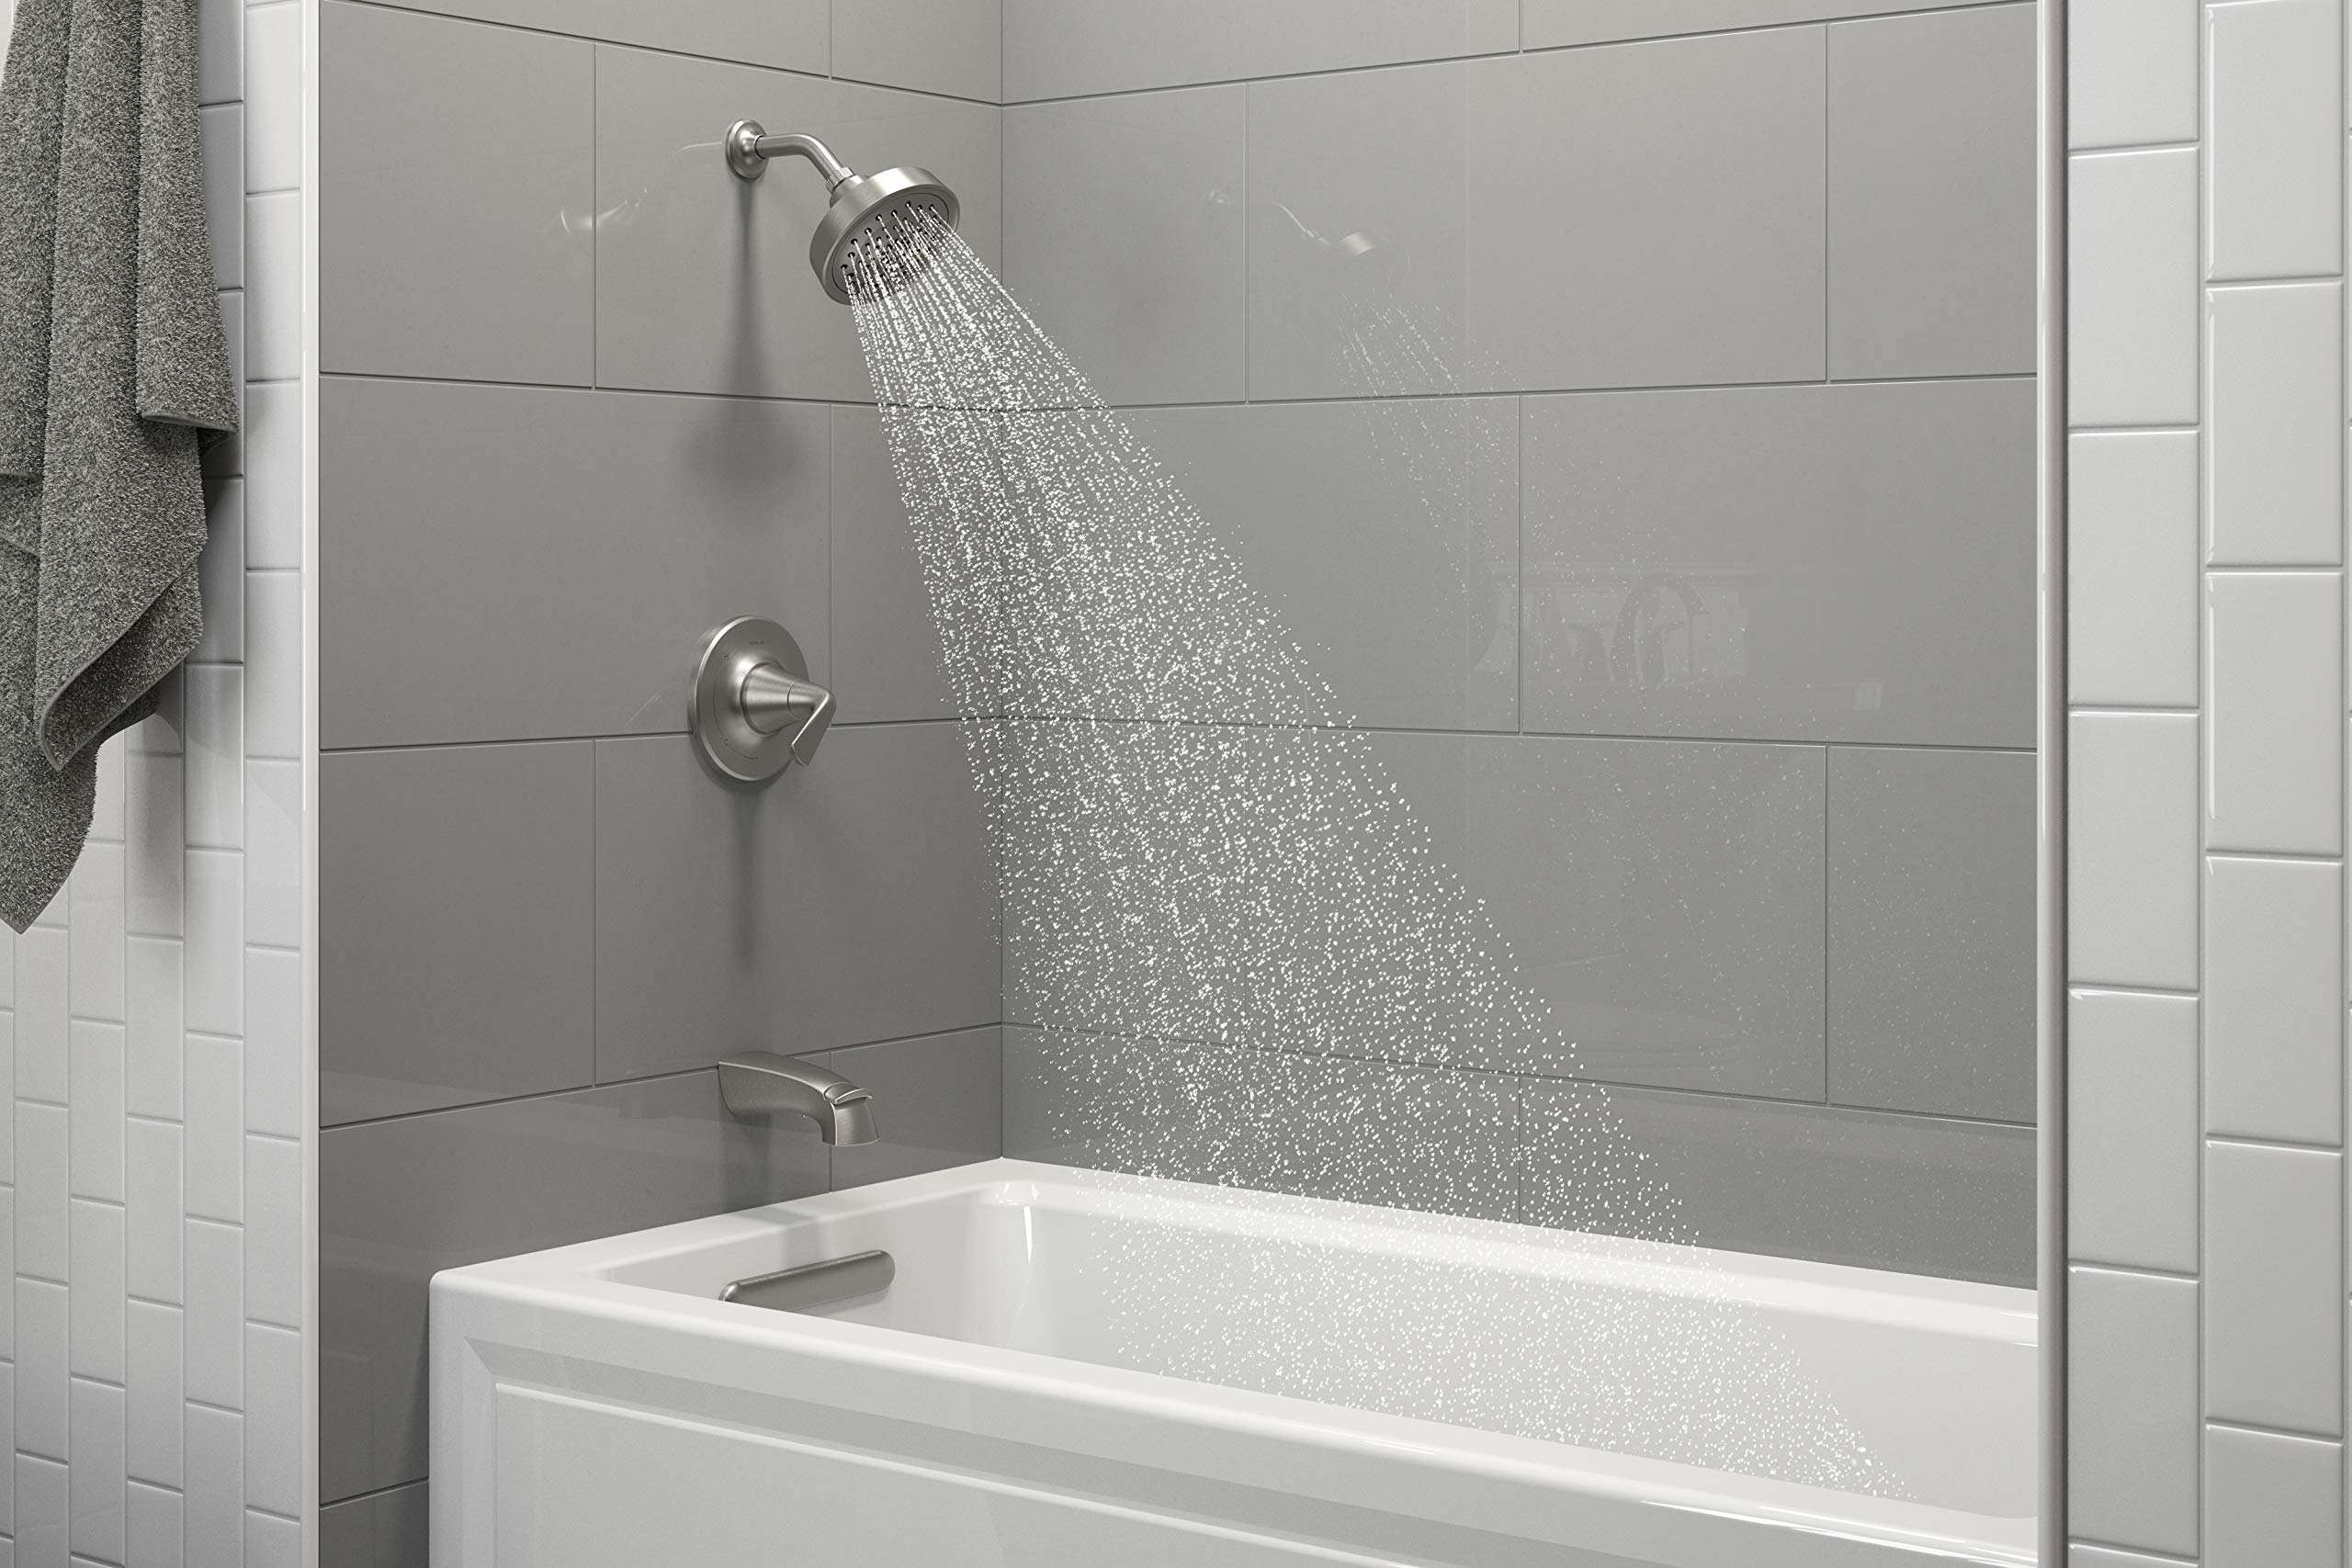 Kohler K-7272-BN Clearflo Slotted Overflow Bath Drain, Vibrant Brushed Nickel, 4.5 pounds